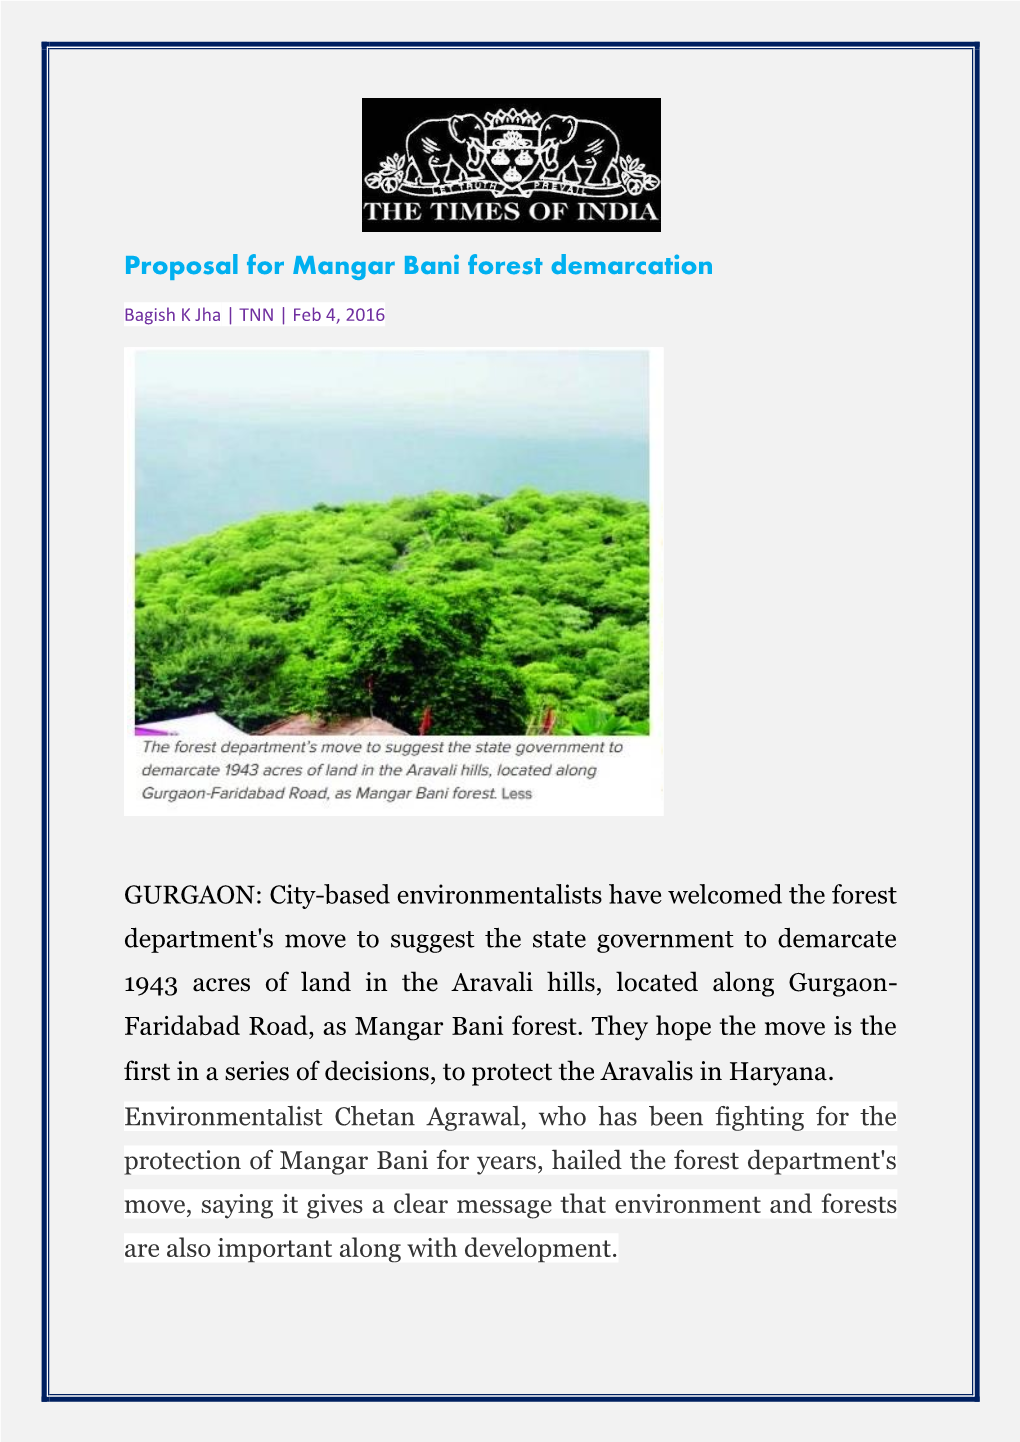 Proposal for Mangar Bani Forest Demarcation